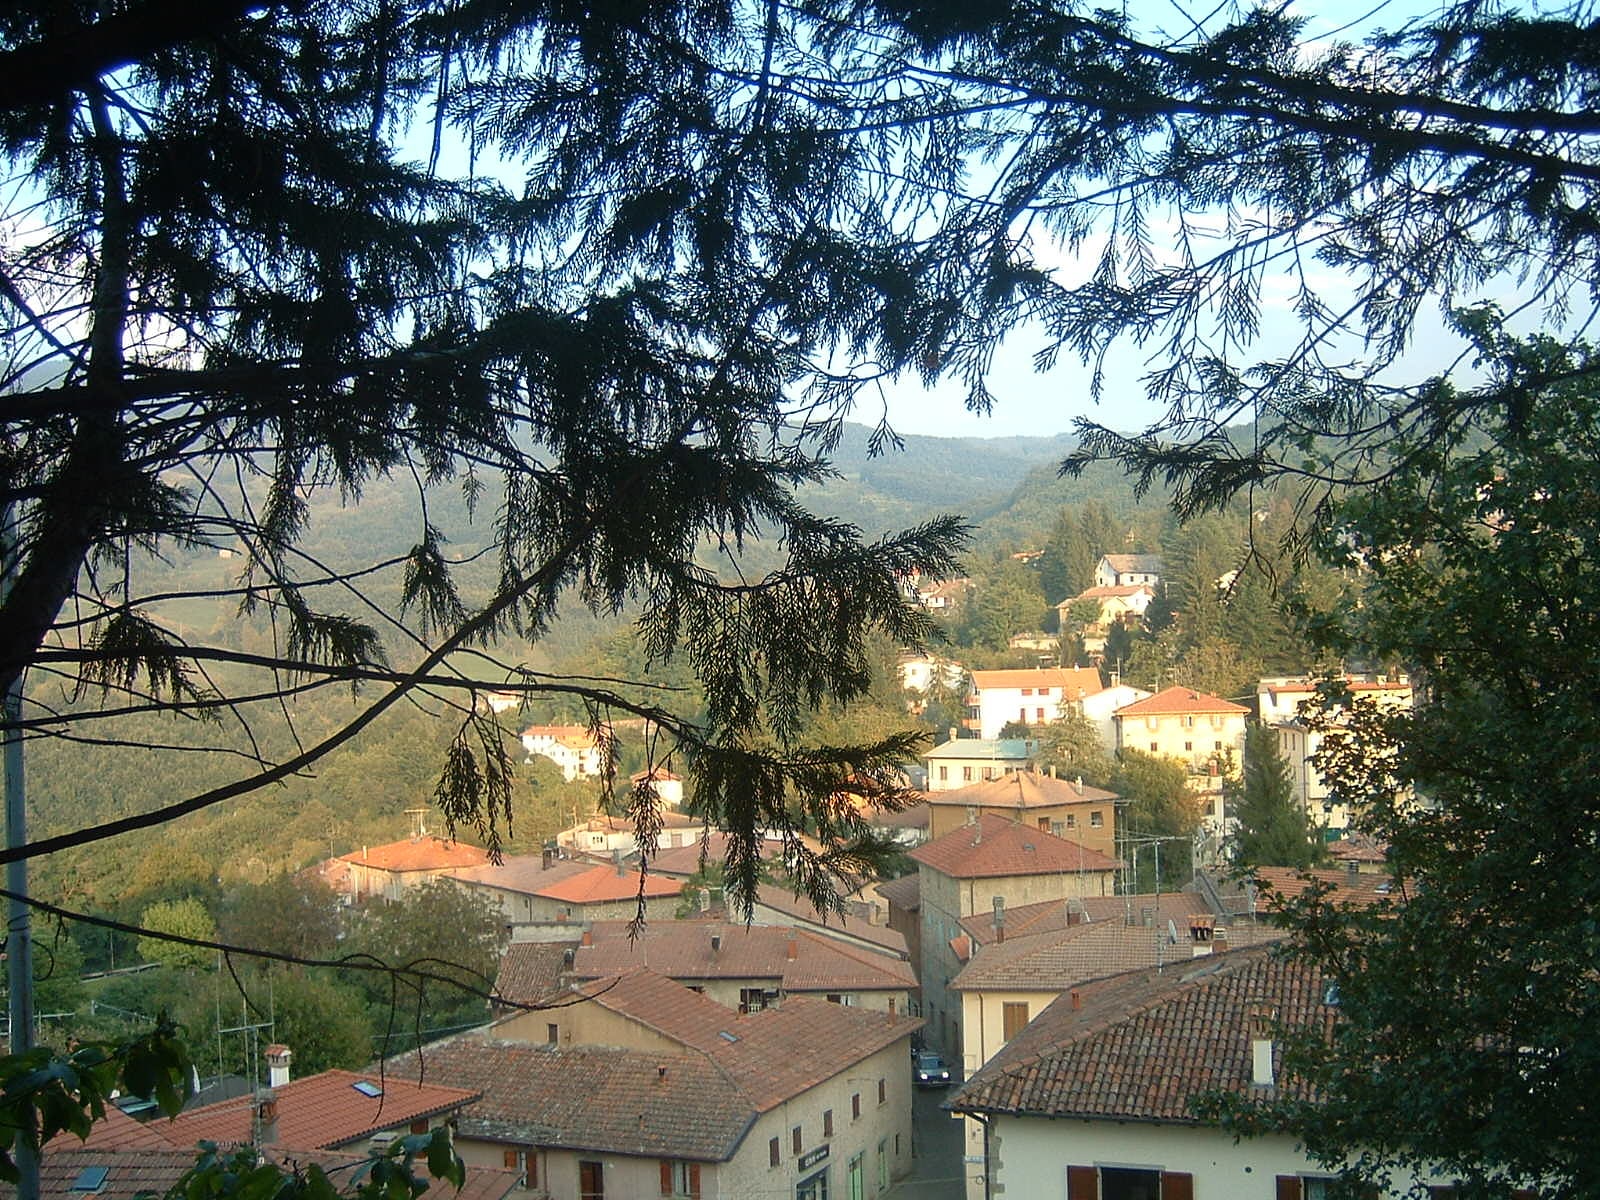 San Benedetto Val di Sambro, Italy